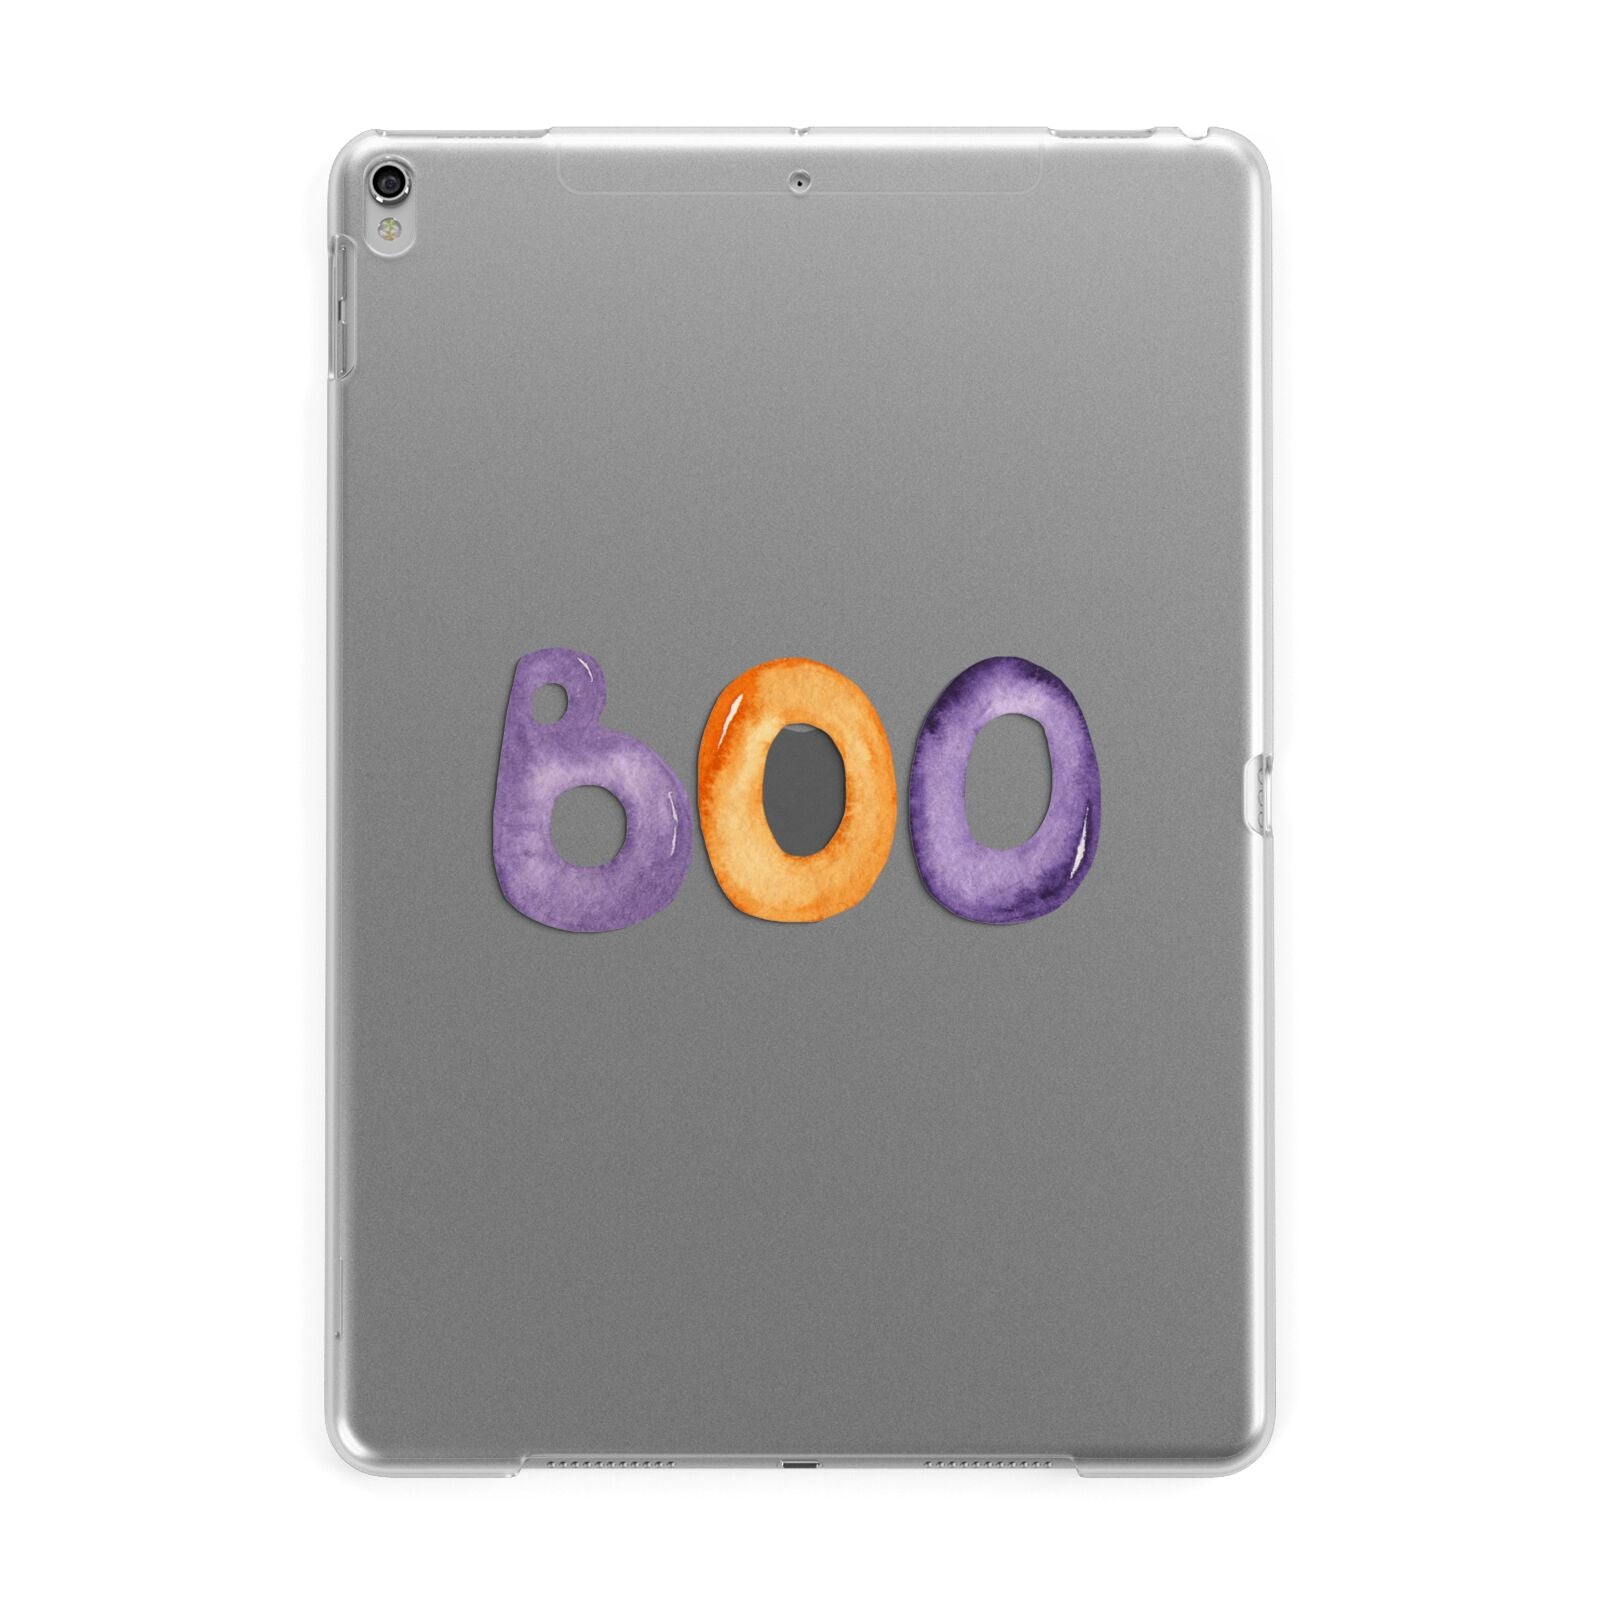 Boo Apple iPad Silver Case